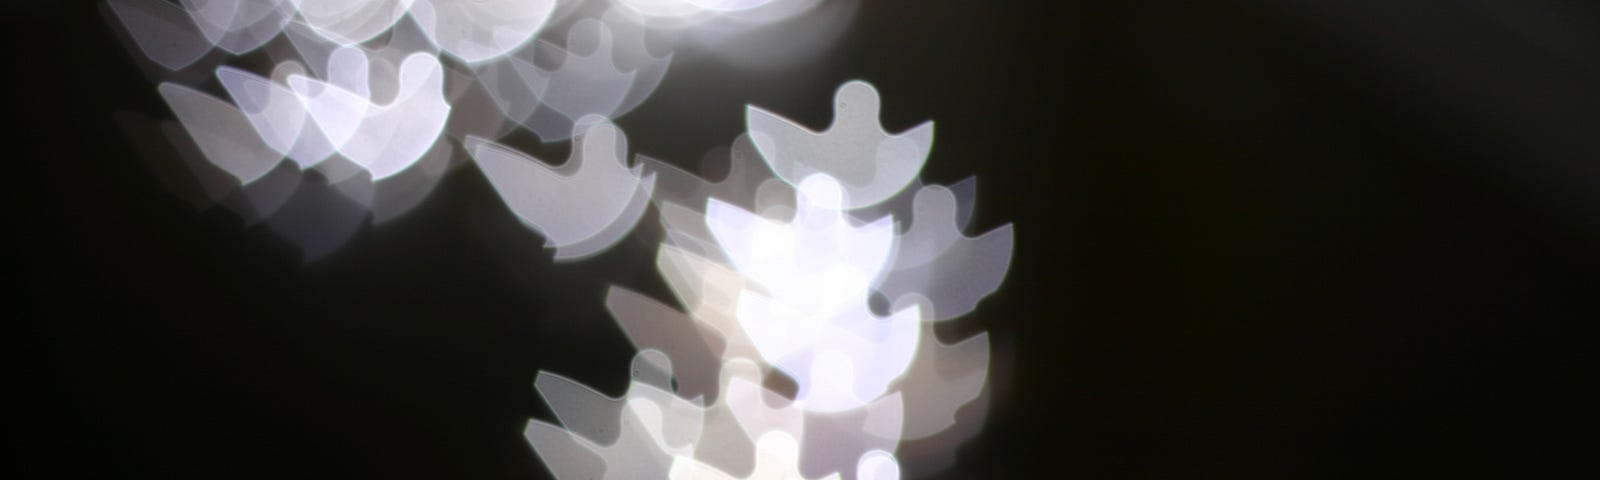 white angel cutouts blurred on a dark background